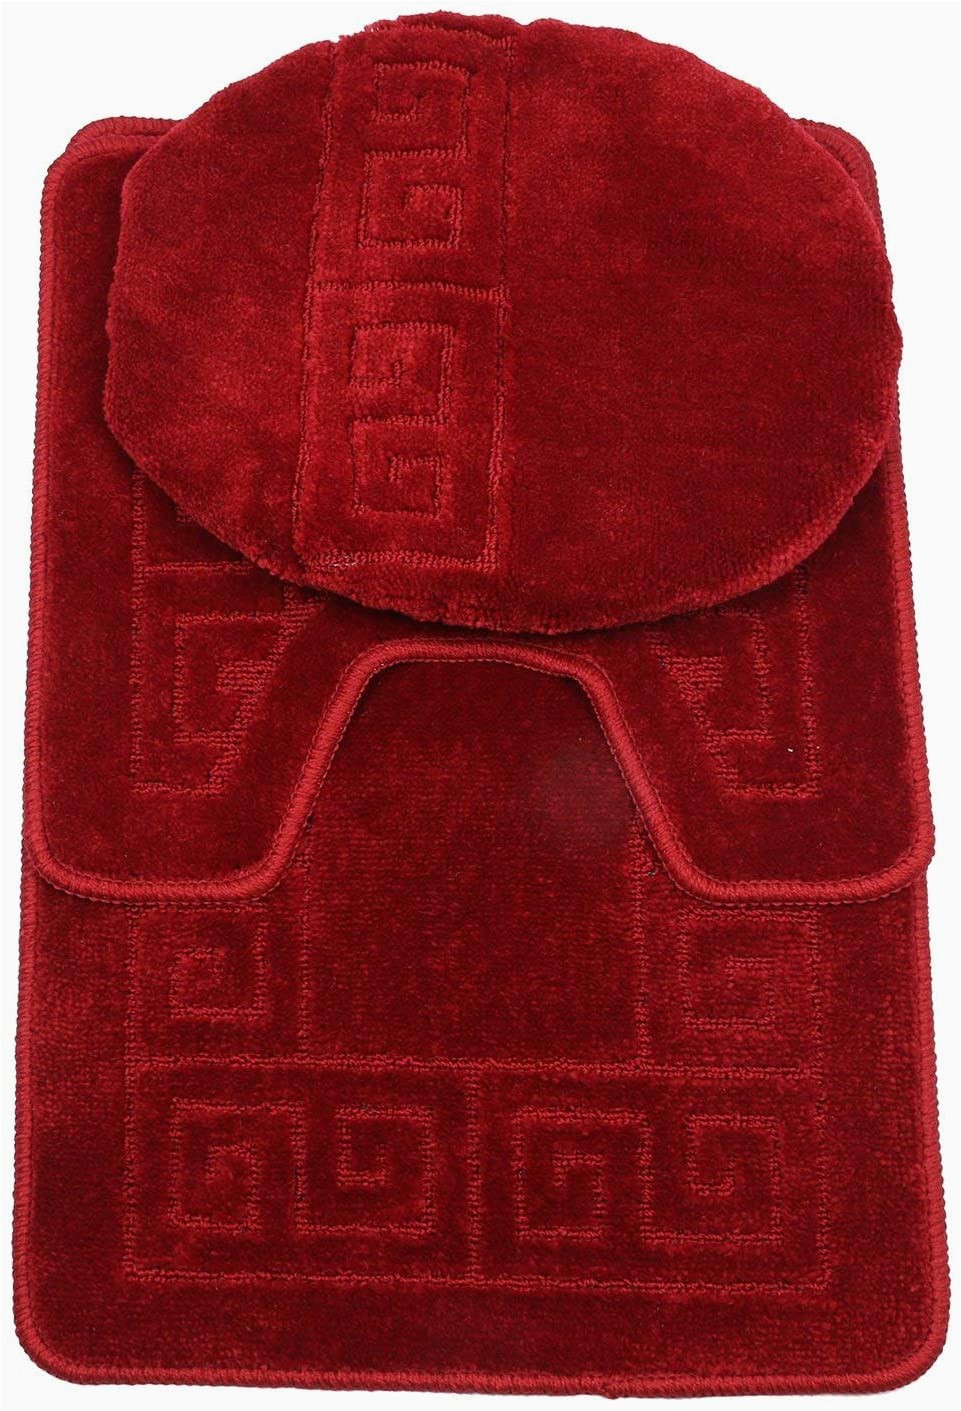 Bright Red Bath Rugs 3 Piece Bath Rug Set Pattern Bathroom Rug 20"x32" Contour Mat 20"x20" with Lid Cover Burgundy